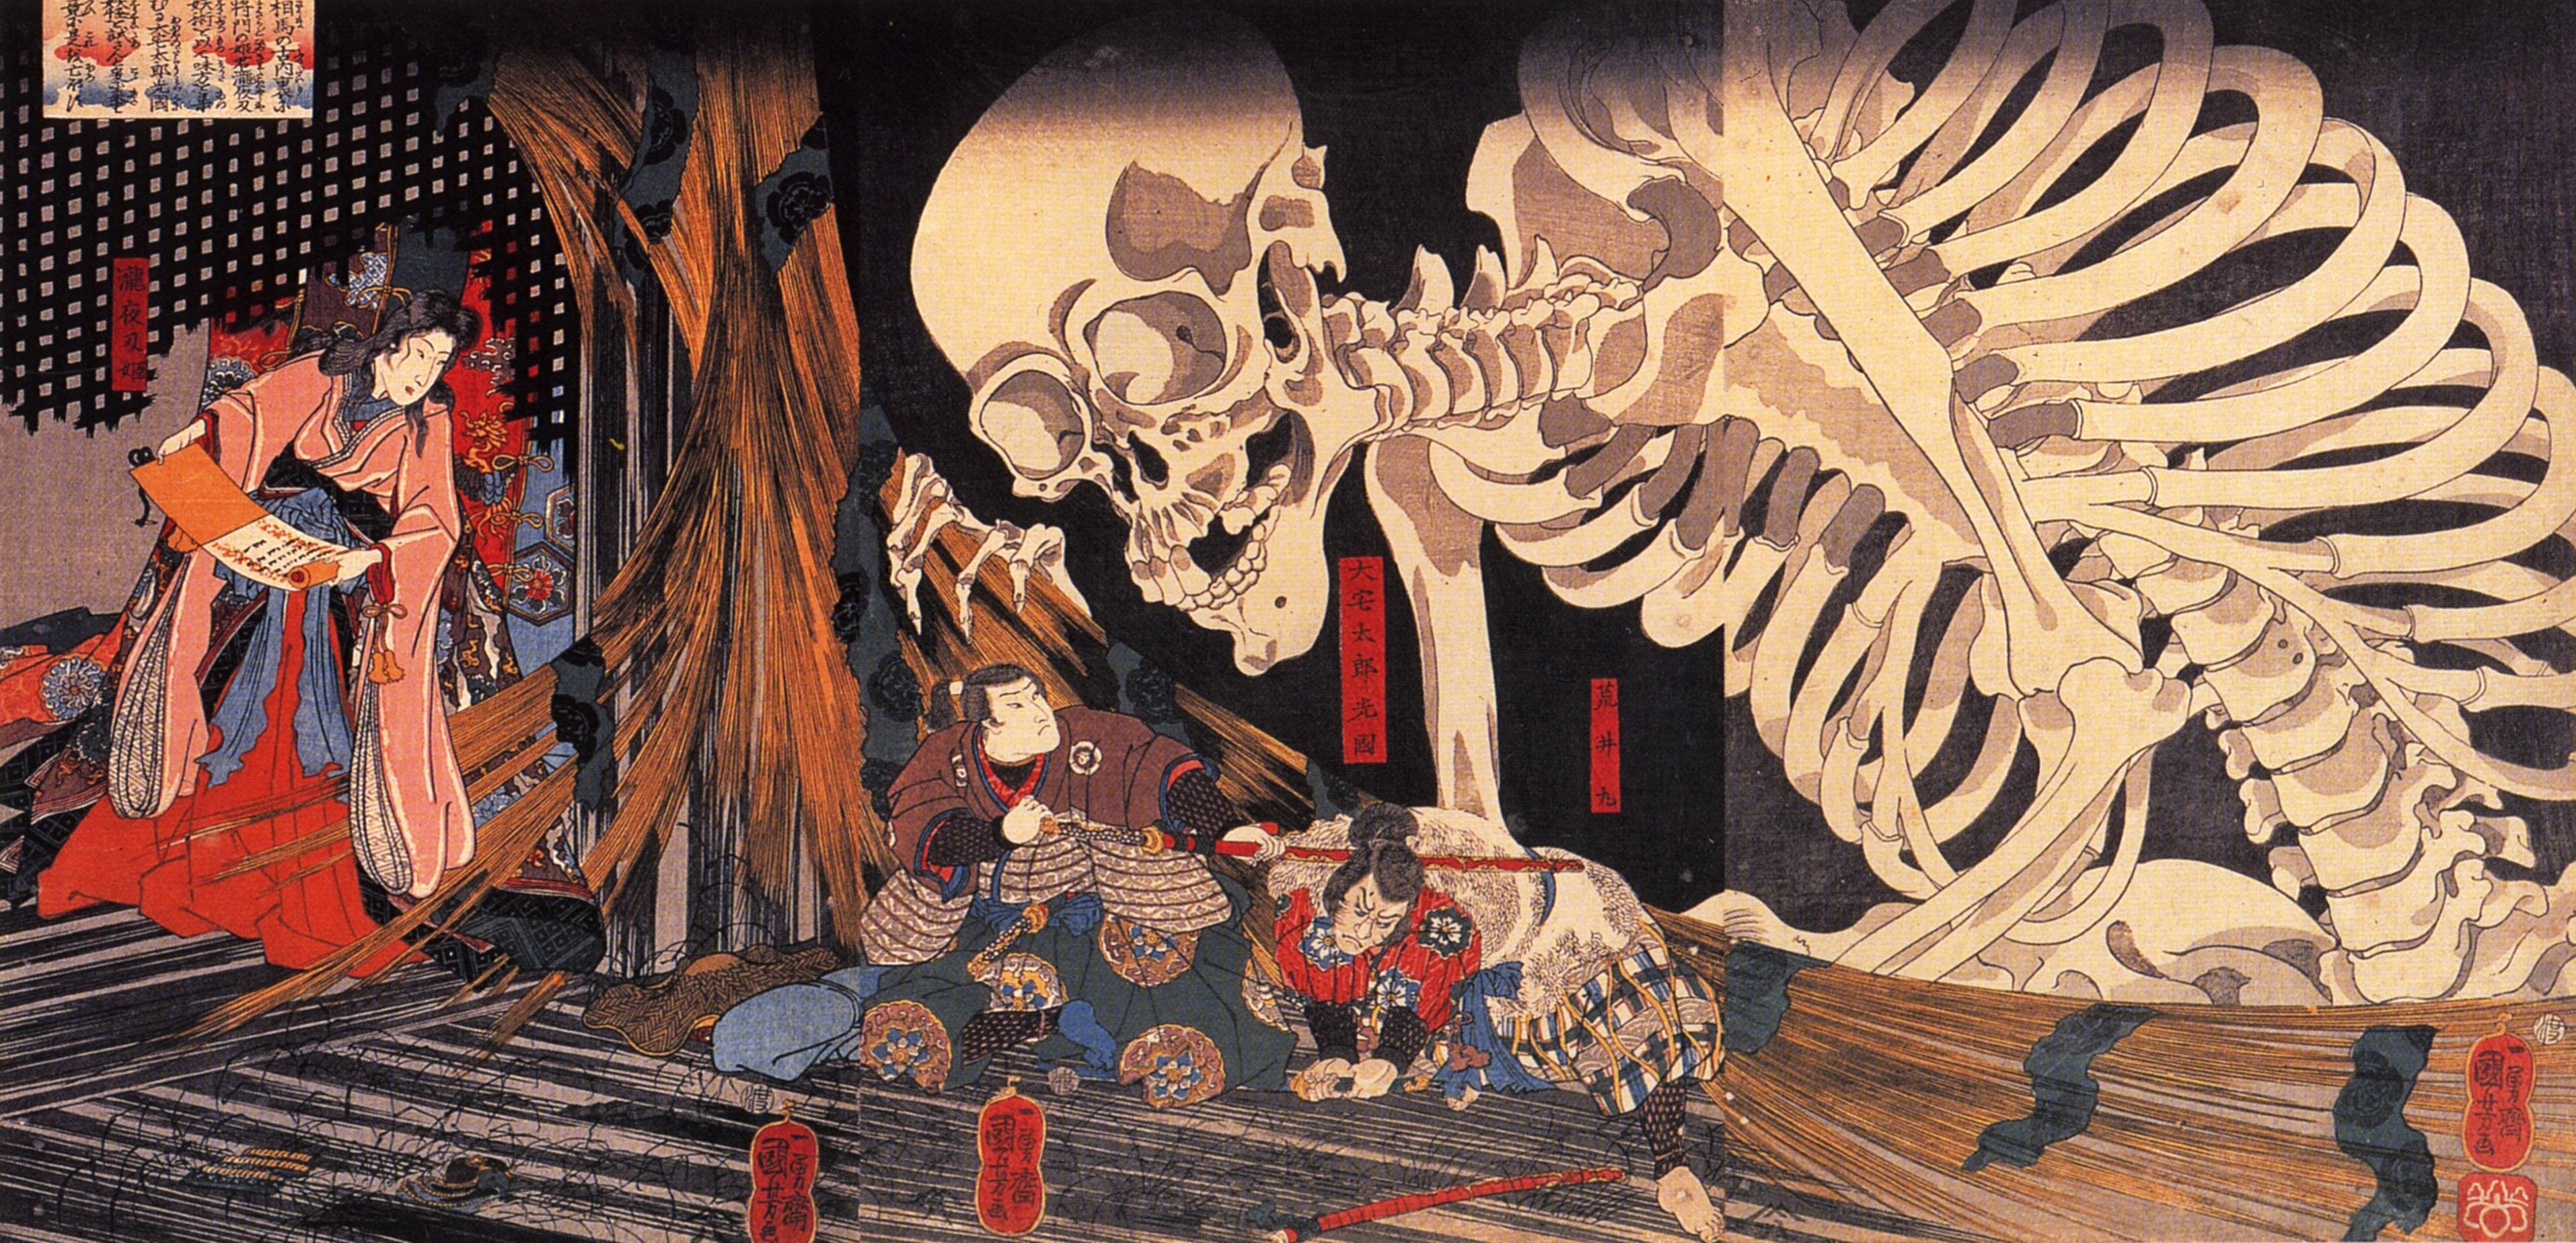 Gashadokuro, Skeleton Wallpaper